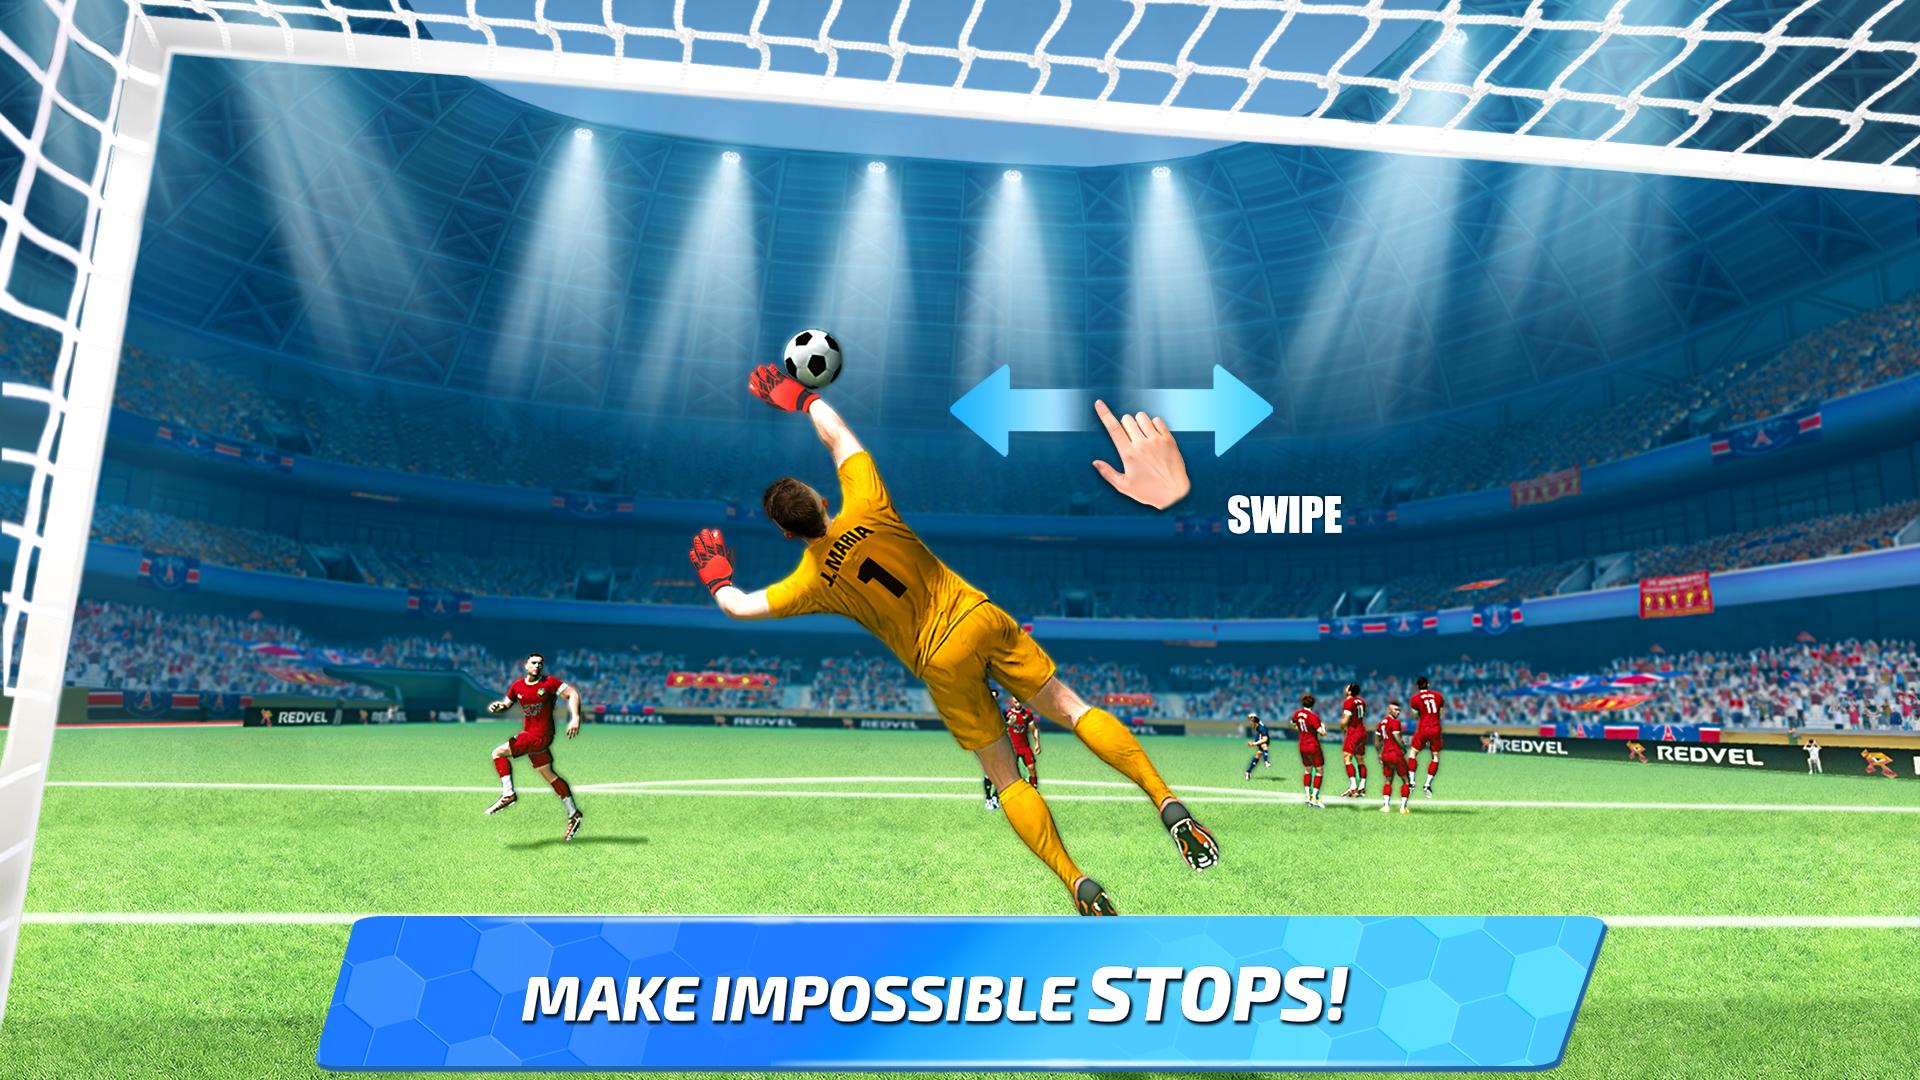 Soccer Star 2020 Football Cards: The soccer game 0.19.0 Screenshot 9